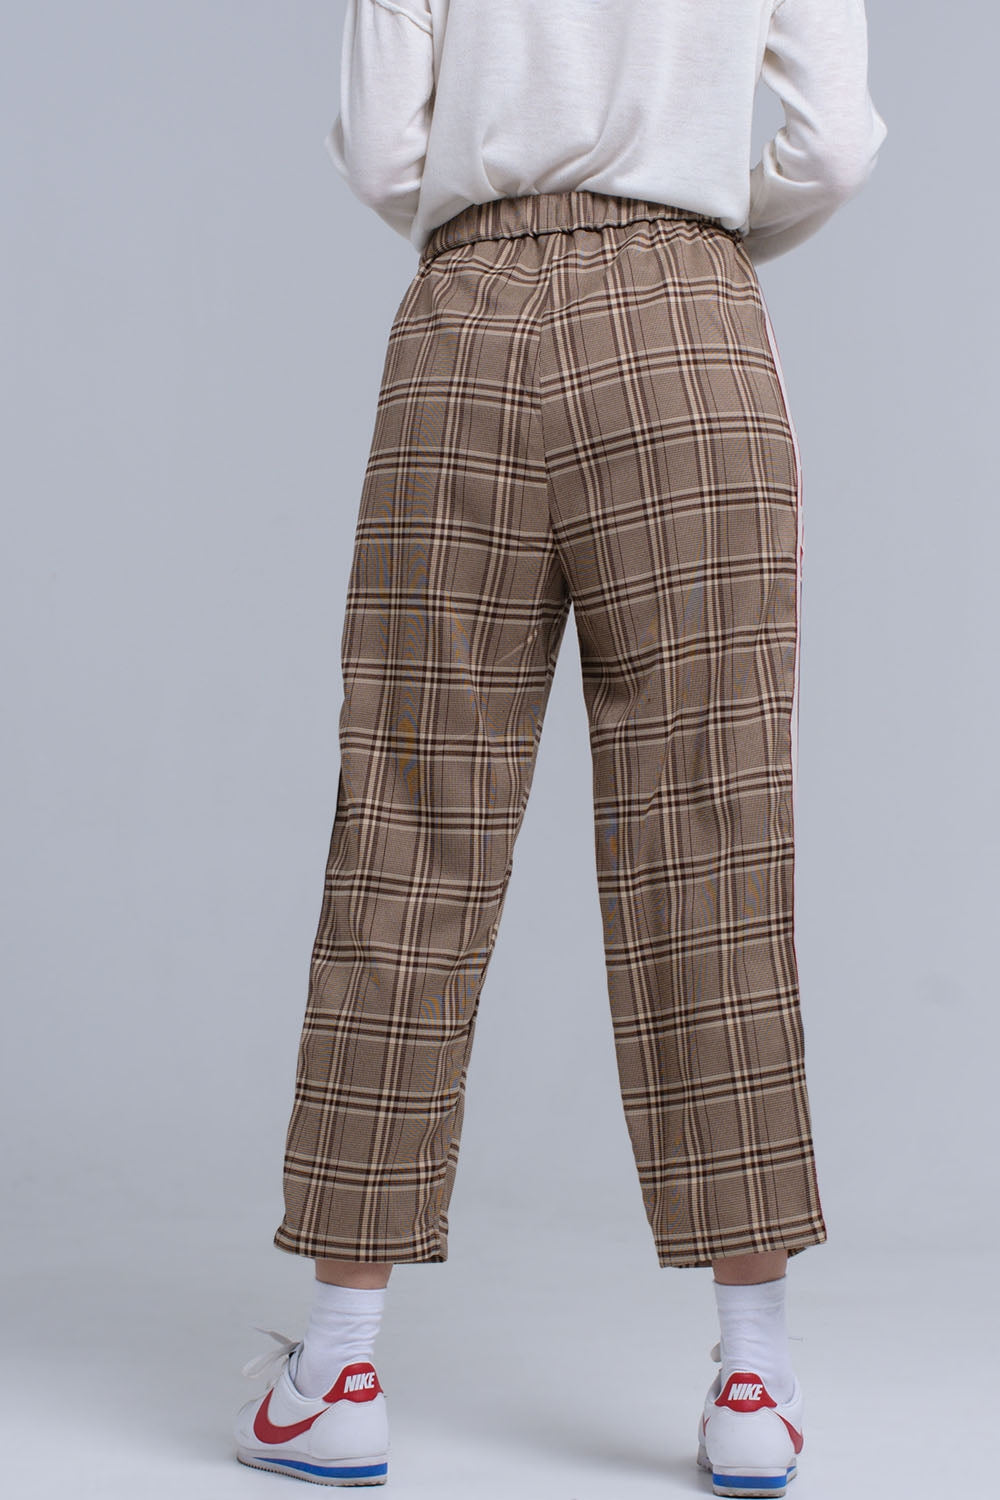 Pantaloni modello scozzese marrone